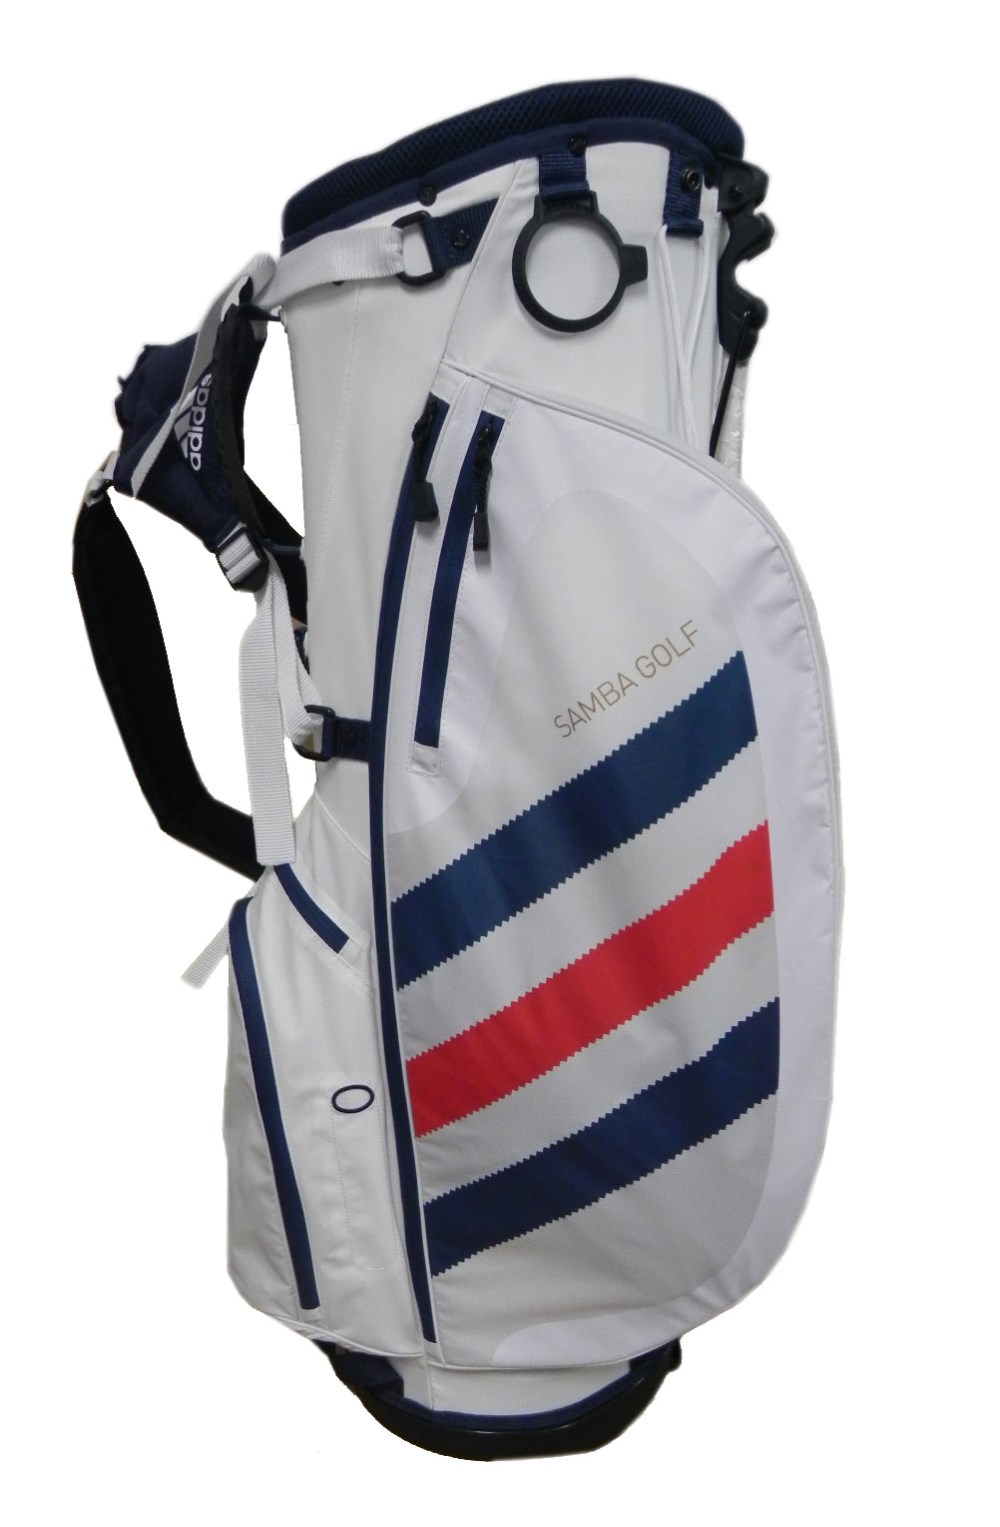 Hot Sale Golf Bag For Wholesale - Buy Golf Bag,Golf Stand Bag,Hot Sale Golf Bag Product on ...